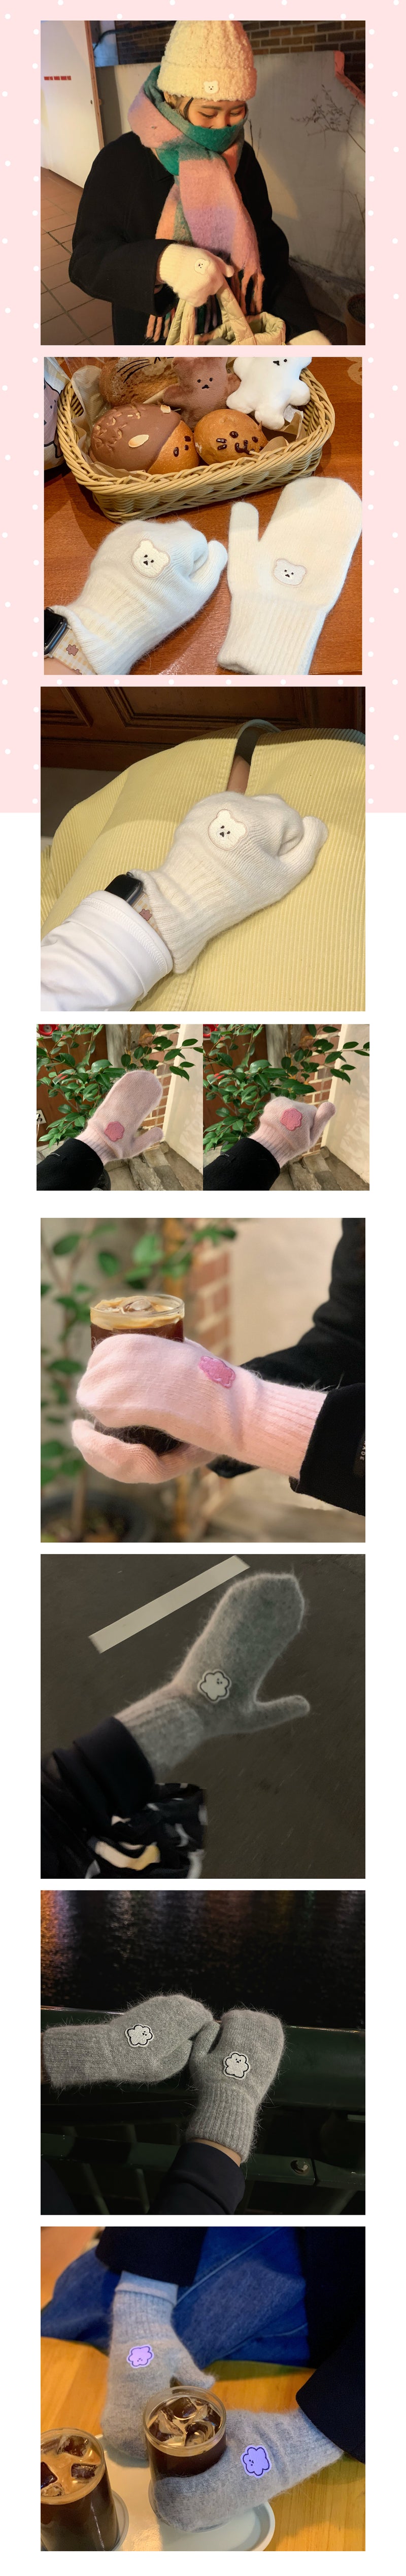 chanibear soft angora mittens (3color-Snow White)